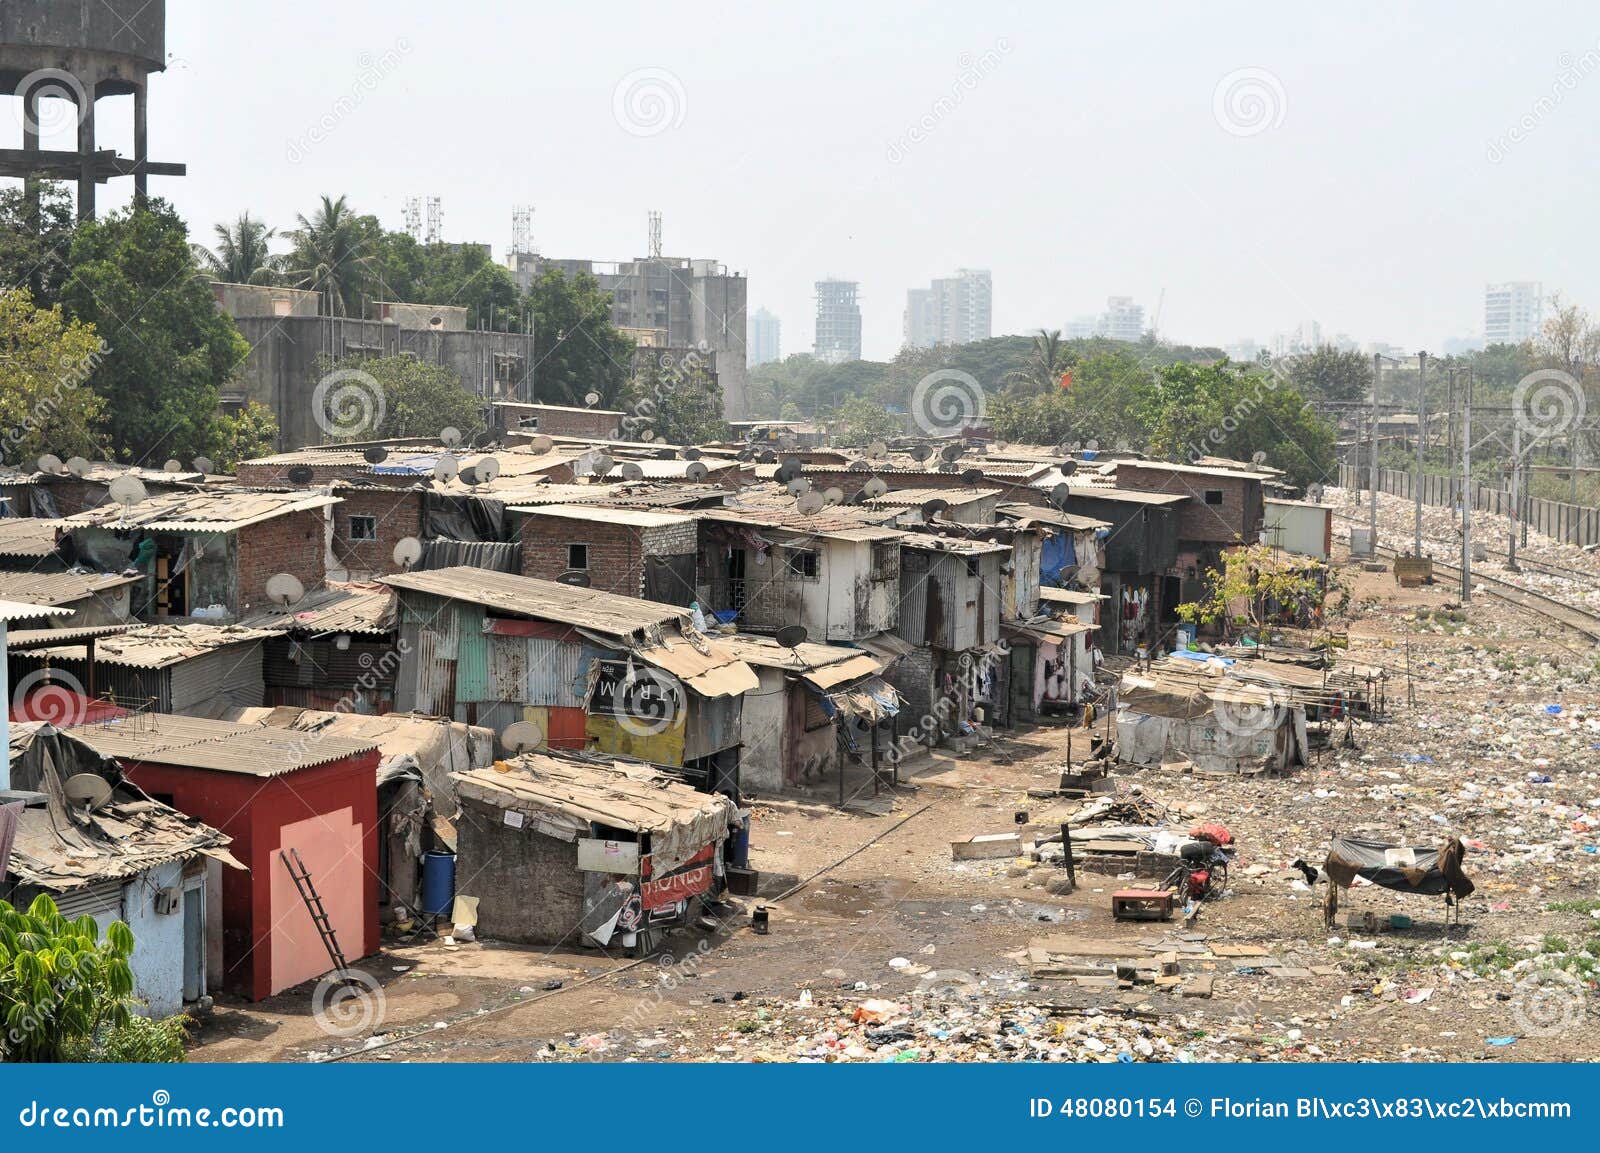 ramshackle-huts-mumbai-s-slum-dharavi-part-northern-biggest-asia-48080154.jpg